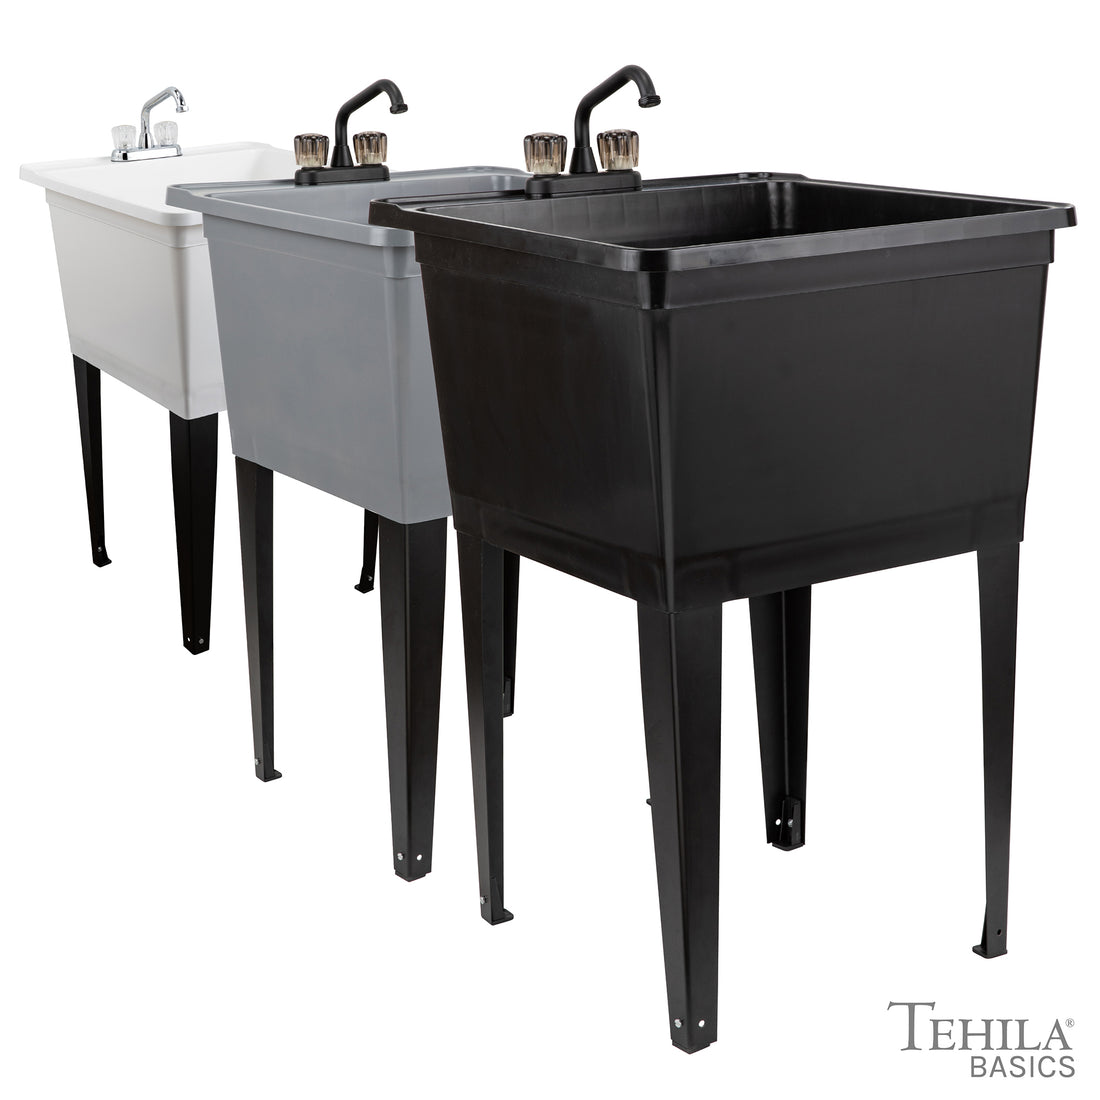 Tehila Basics Freestanding Grey Utility Sink with Black Finish Dual Handle Utility Faucet - Utility sinks vanites Tehila